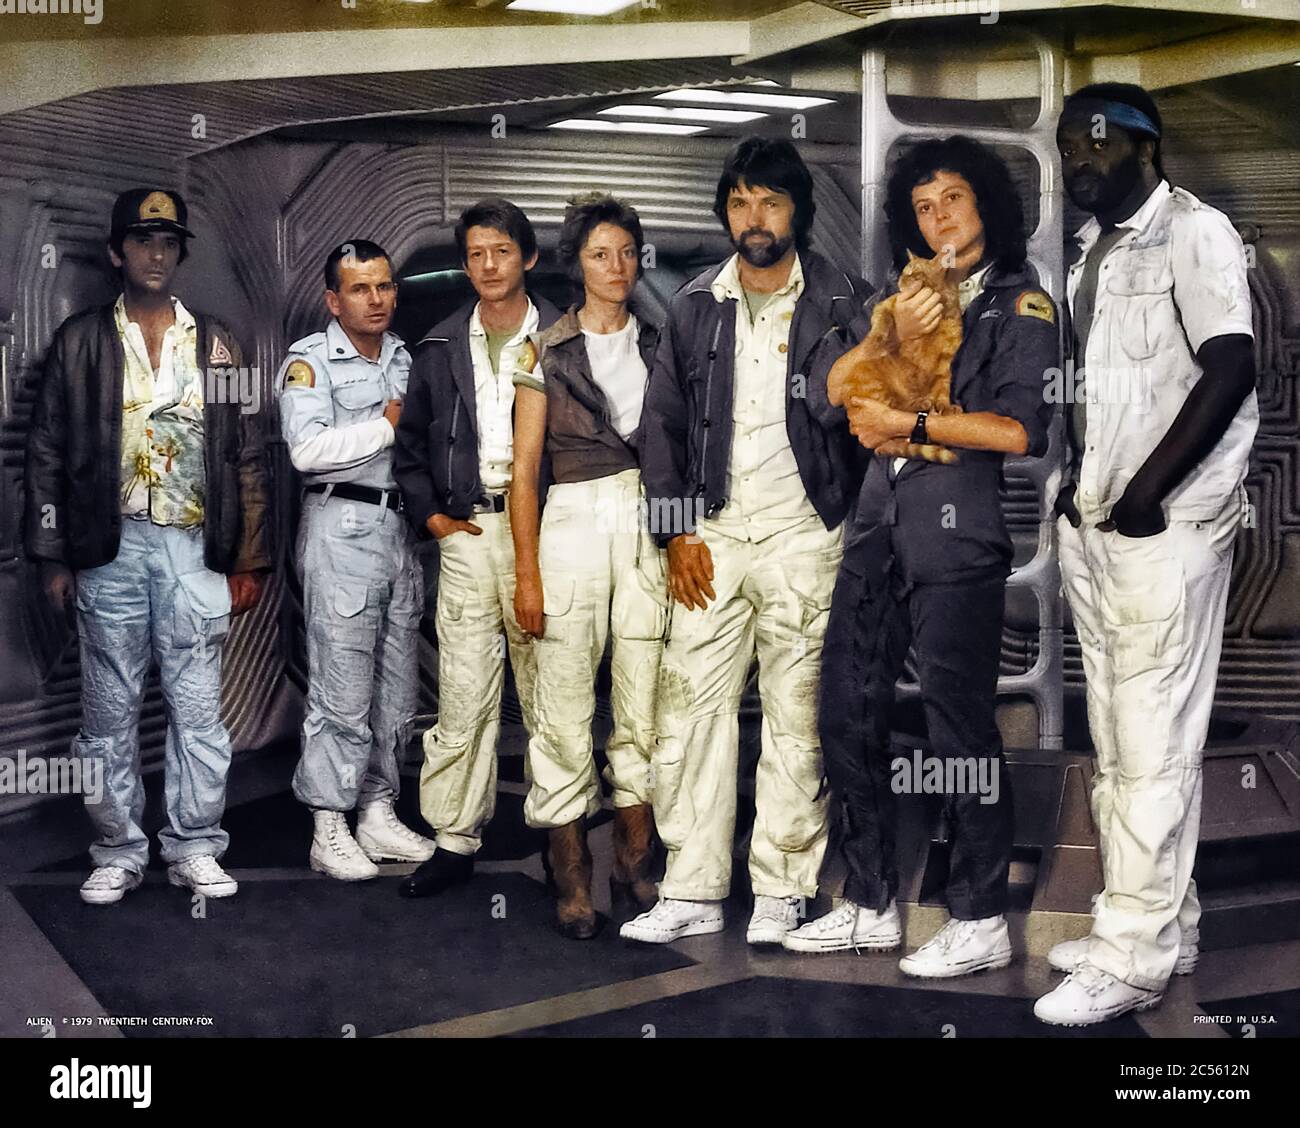 Crew of the USCSS Nostromo from Alien (1979) directed by Ridley Scott and starring from left to right Harry Dean Stanton (Brett), Ian Holm (Ash), John Hurt (Kane), Veronica Cartwright (Lambert), Tom Skerritt (Dallas), Jones the cat, Sigourney Weaver (Ripley) and Yaphet Kotto (Parker). Stock Photo